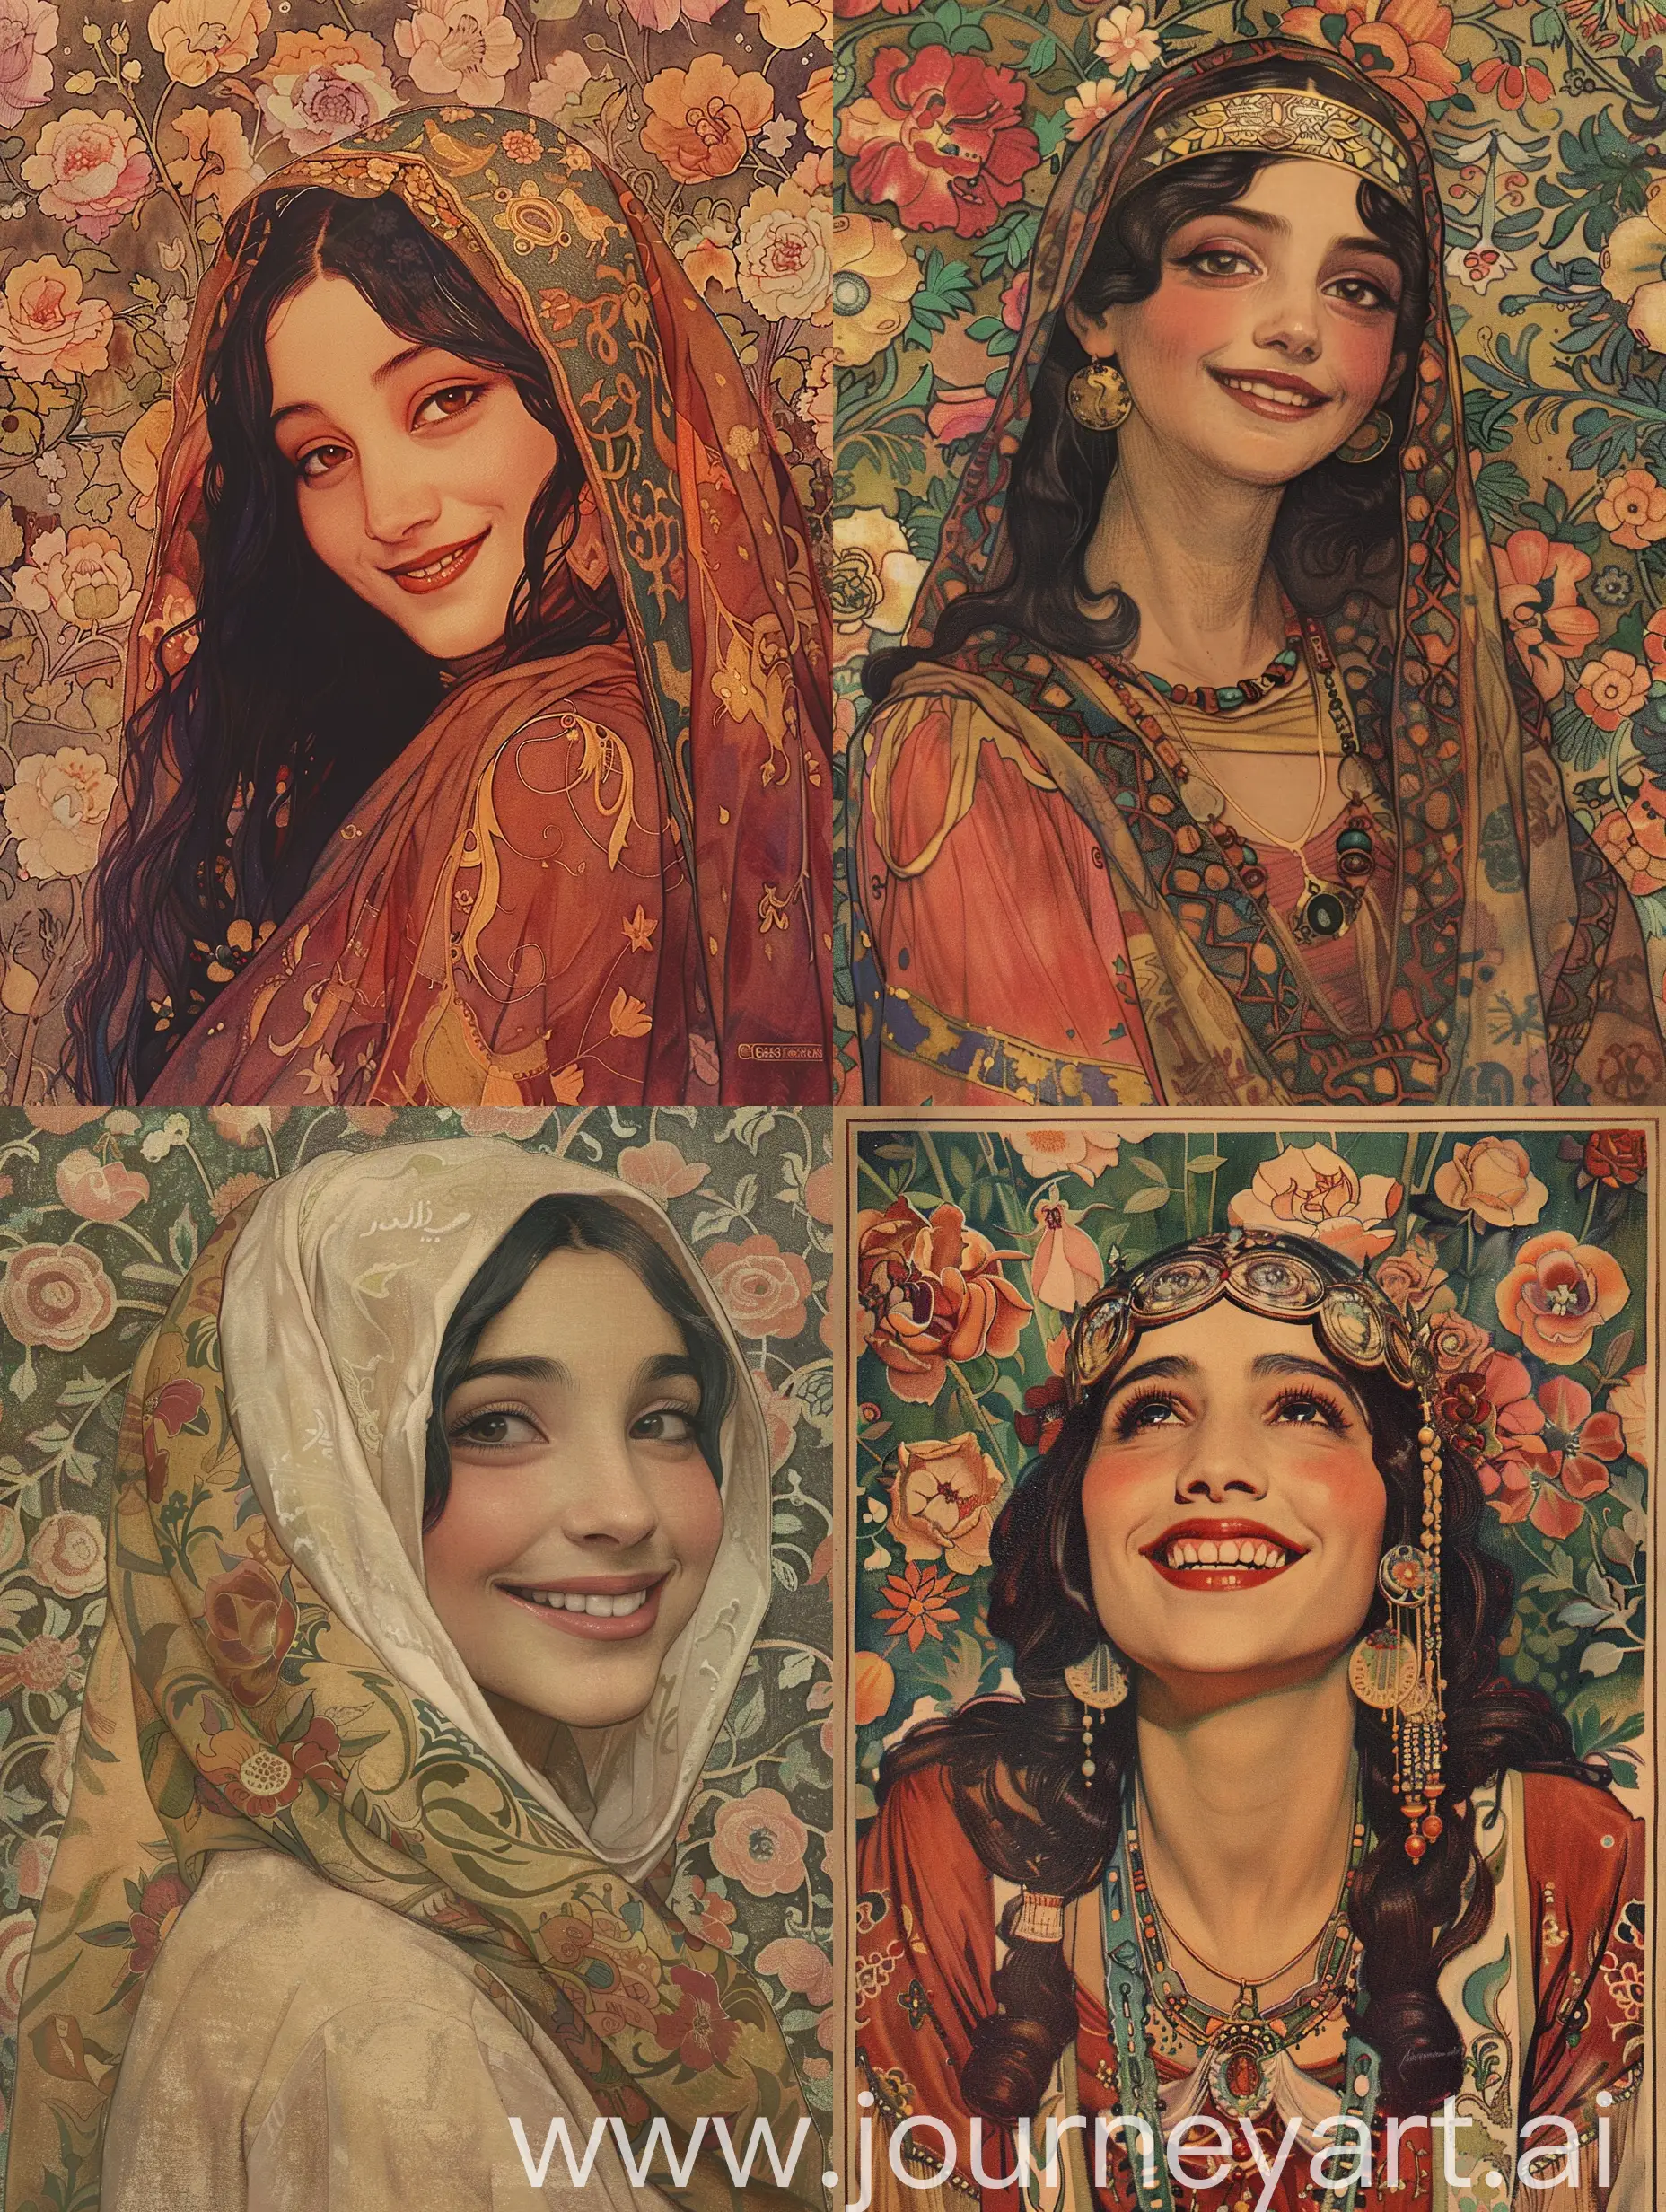 Enchanting-Portrait-of-a-Joyful-Arabic-1001-Nights-Djinn-Girl-Amidst-Flowery-Splendor